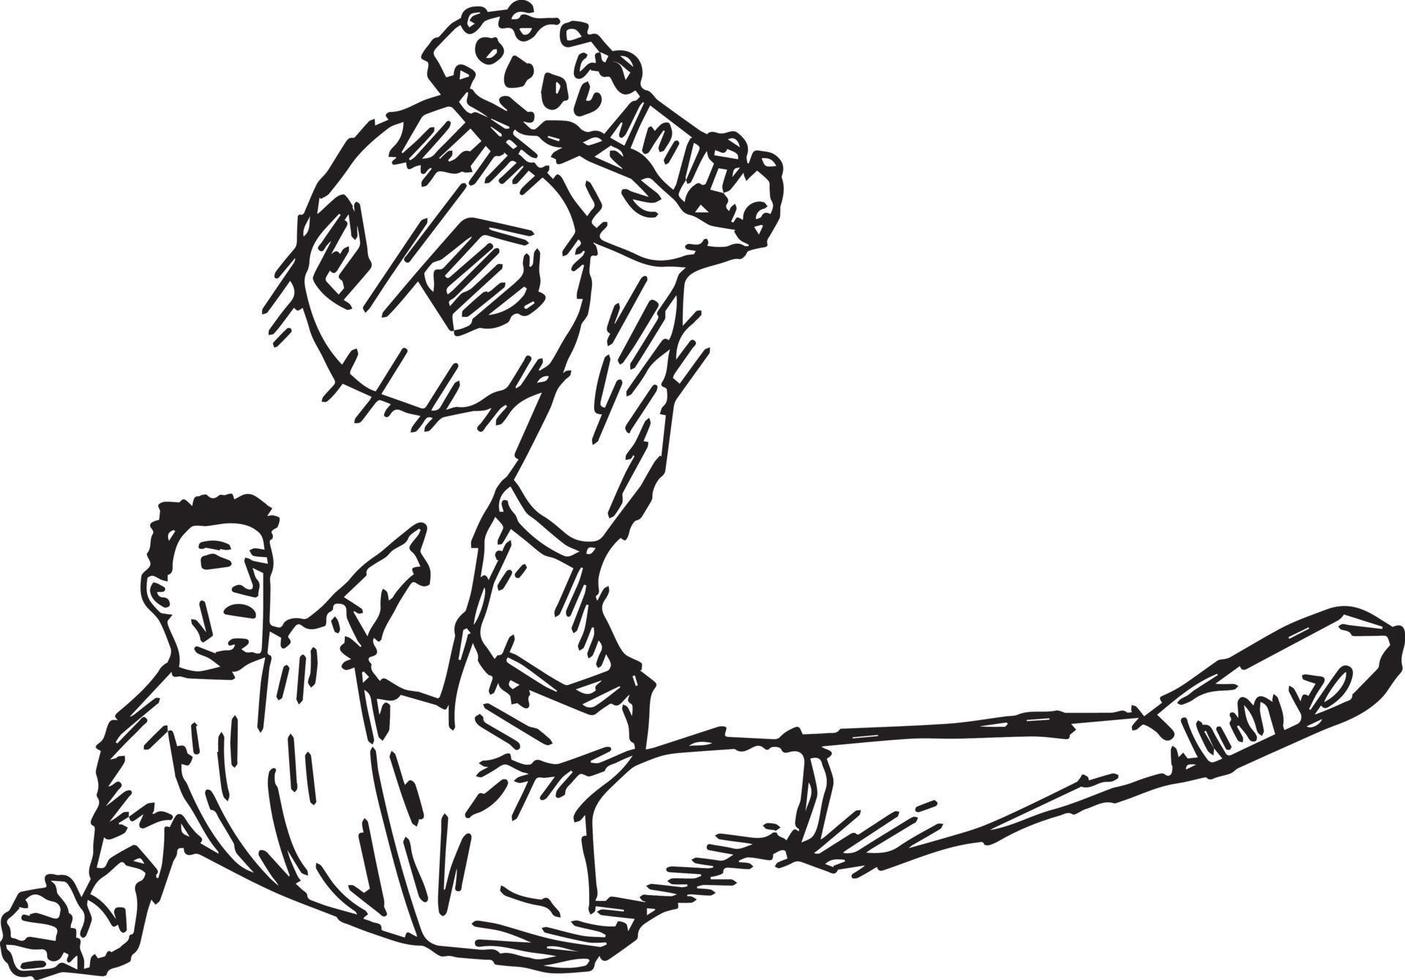 soccer volley kick - vector illustration sketch hand drawn